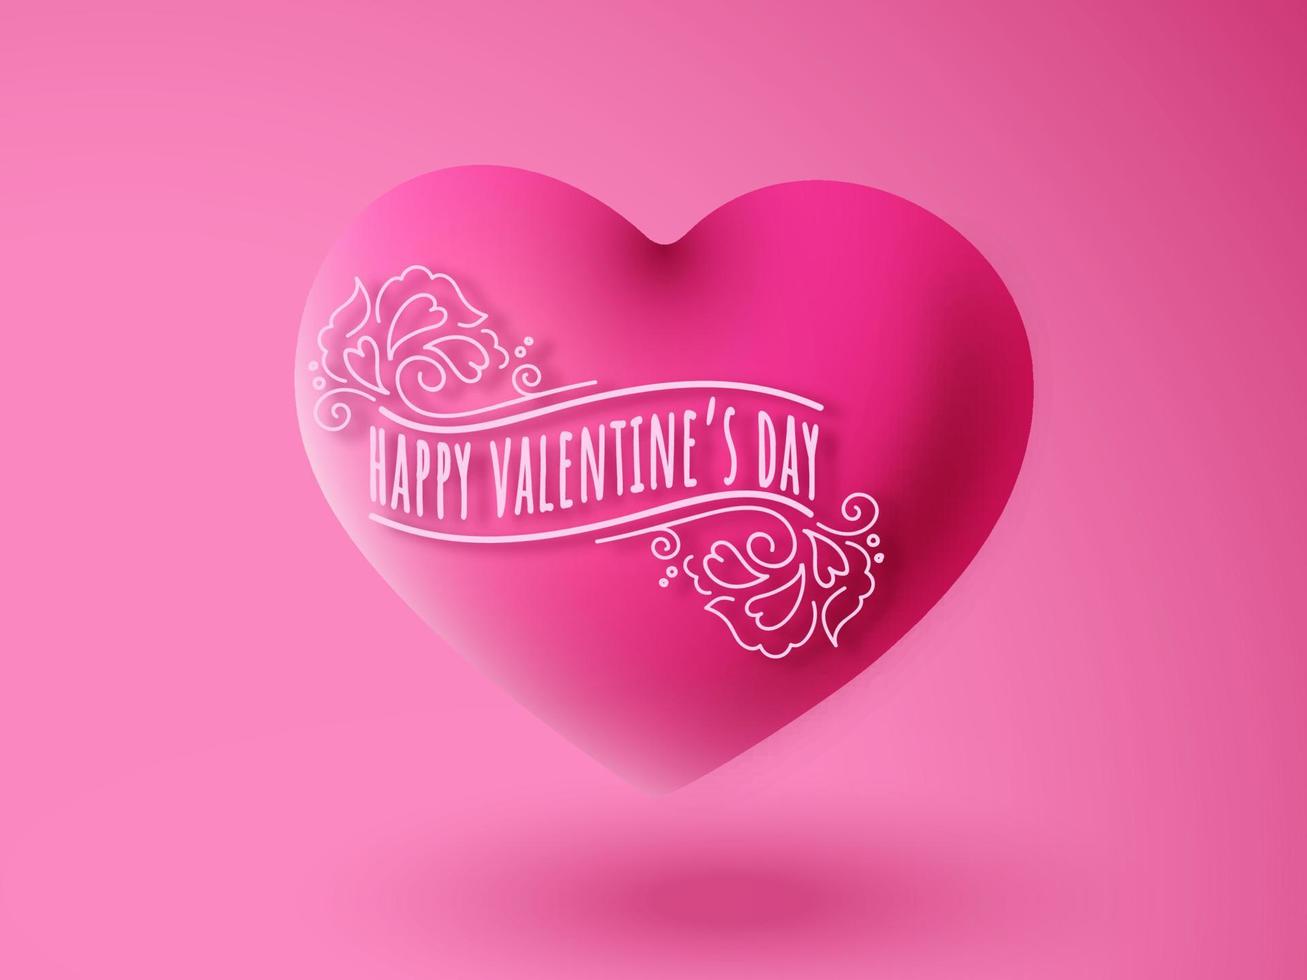 contento San Valentín día texto en 3d rosado corazón y lustroso antecedentes. vector